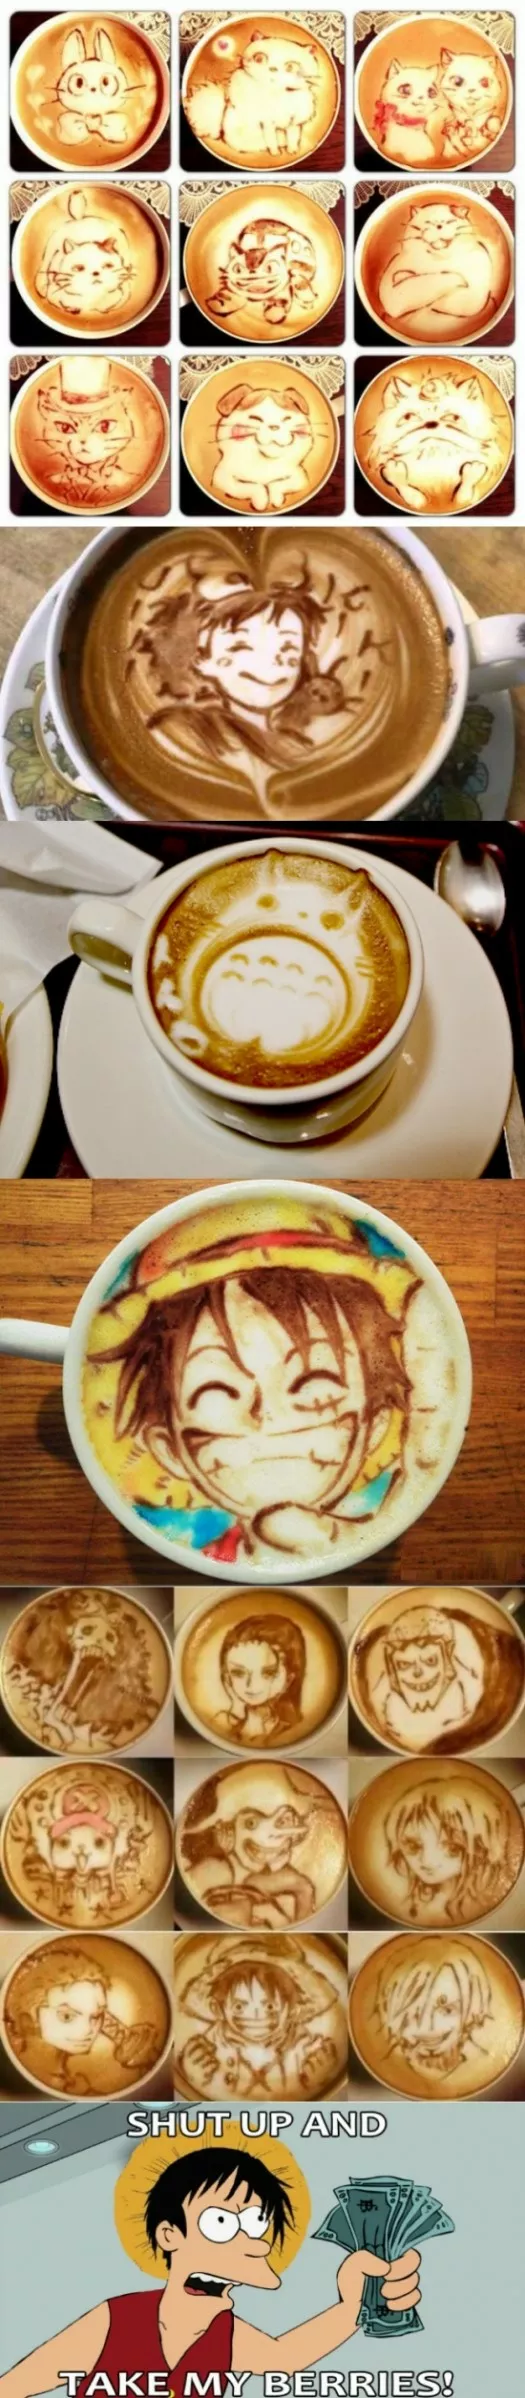 Buen cafe